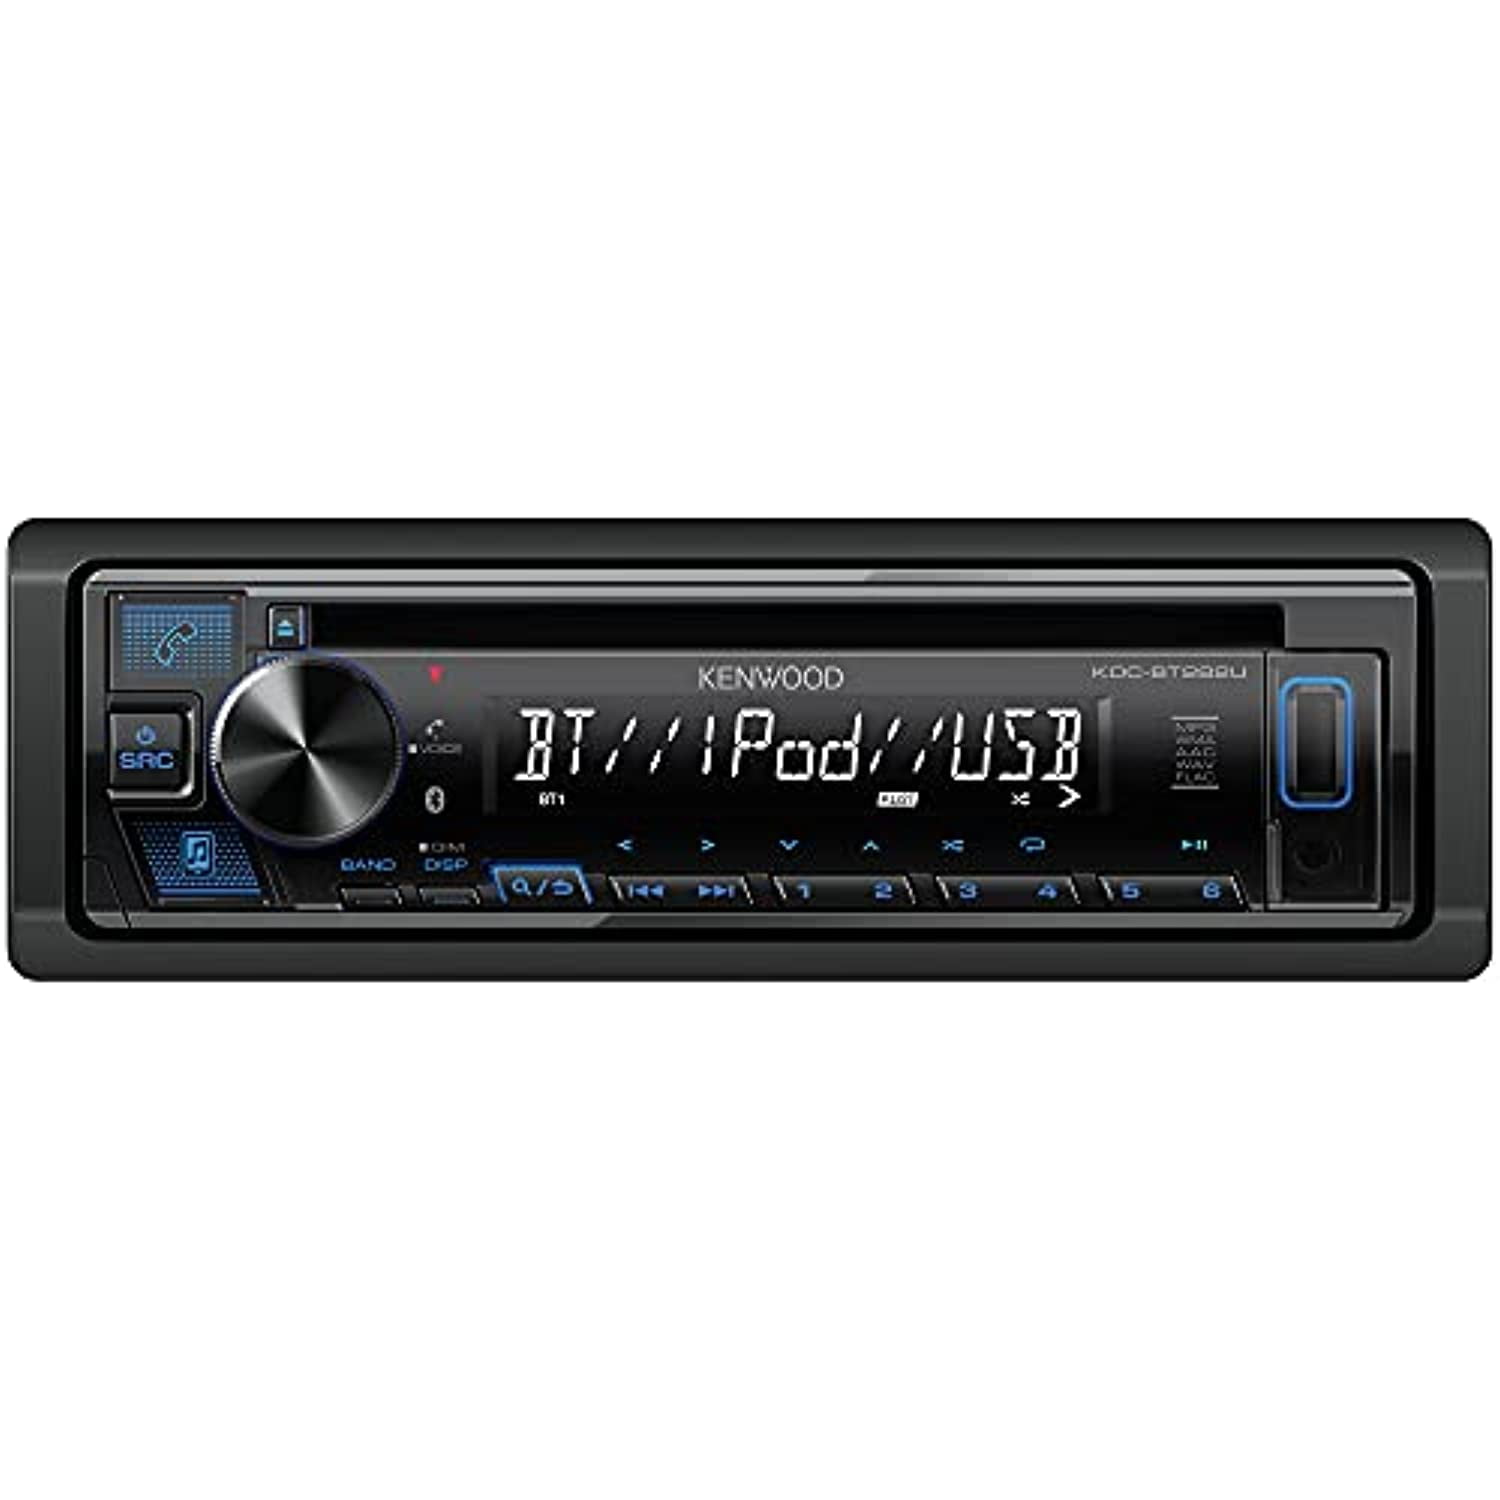 KDC-BT282U CD Car Stereo - Single Din, Bluetooth Audio, USB MP3, FLAC, Aux in, FM Radio, Detachable face White 13-Digit LCD Display and Blue Button Illumination - Walmart.com